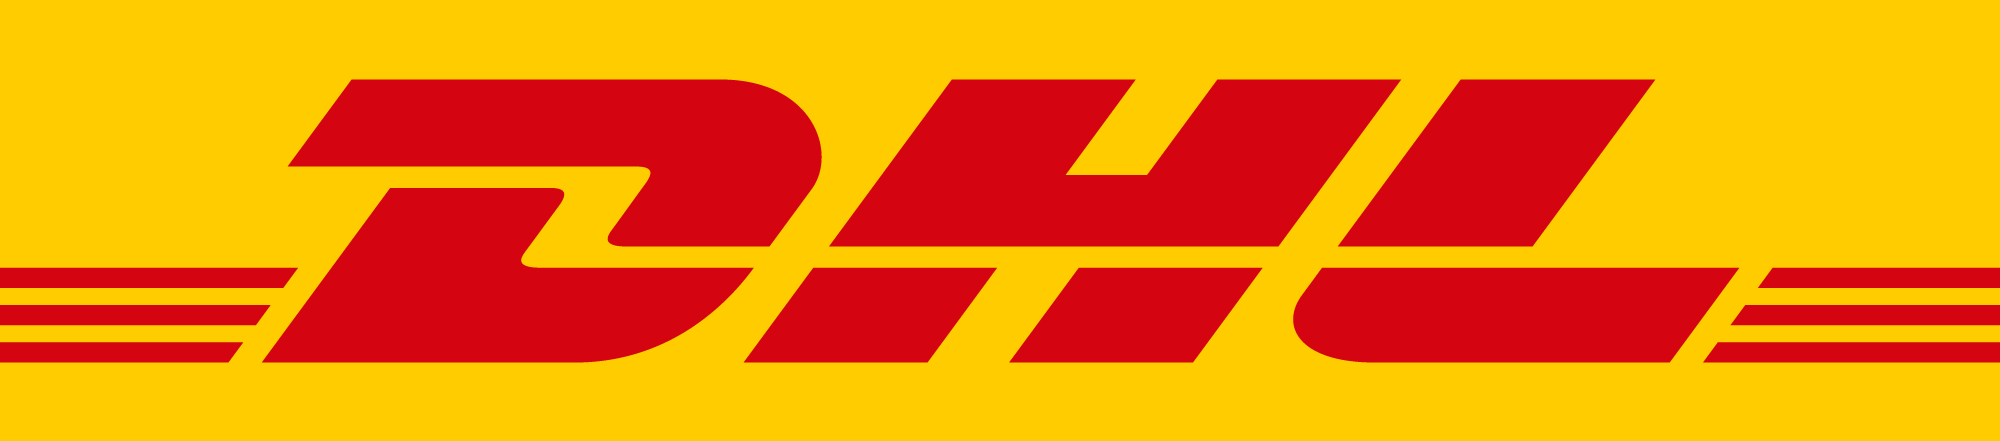 DHL_logo_rgb